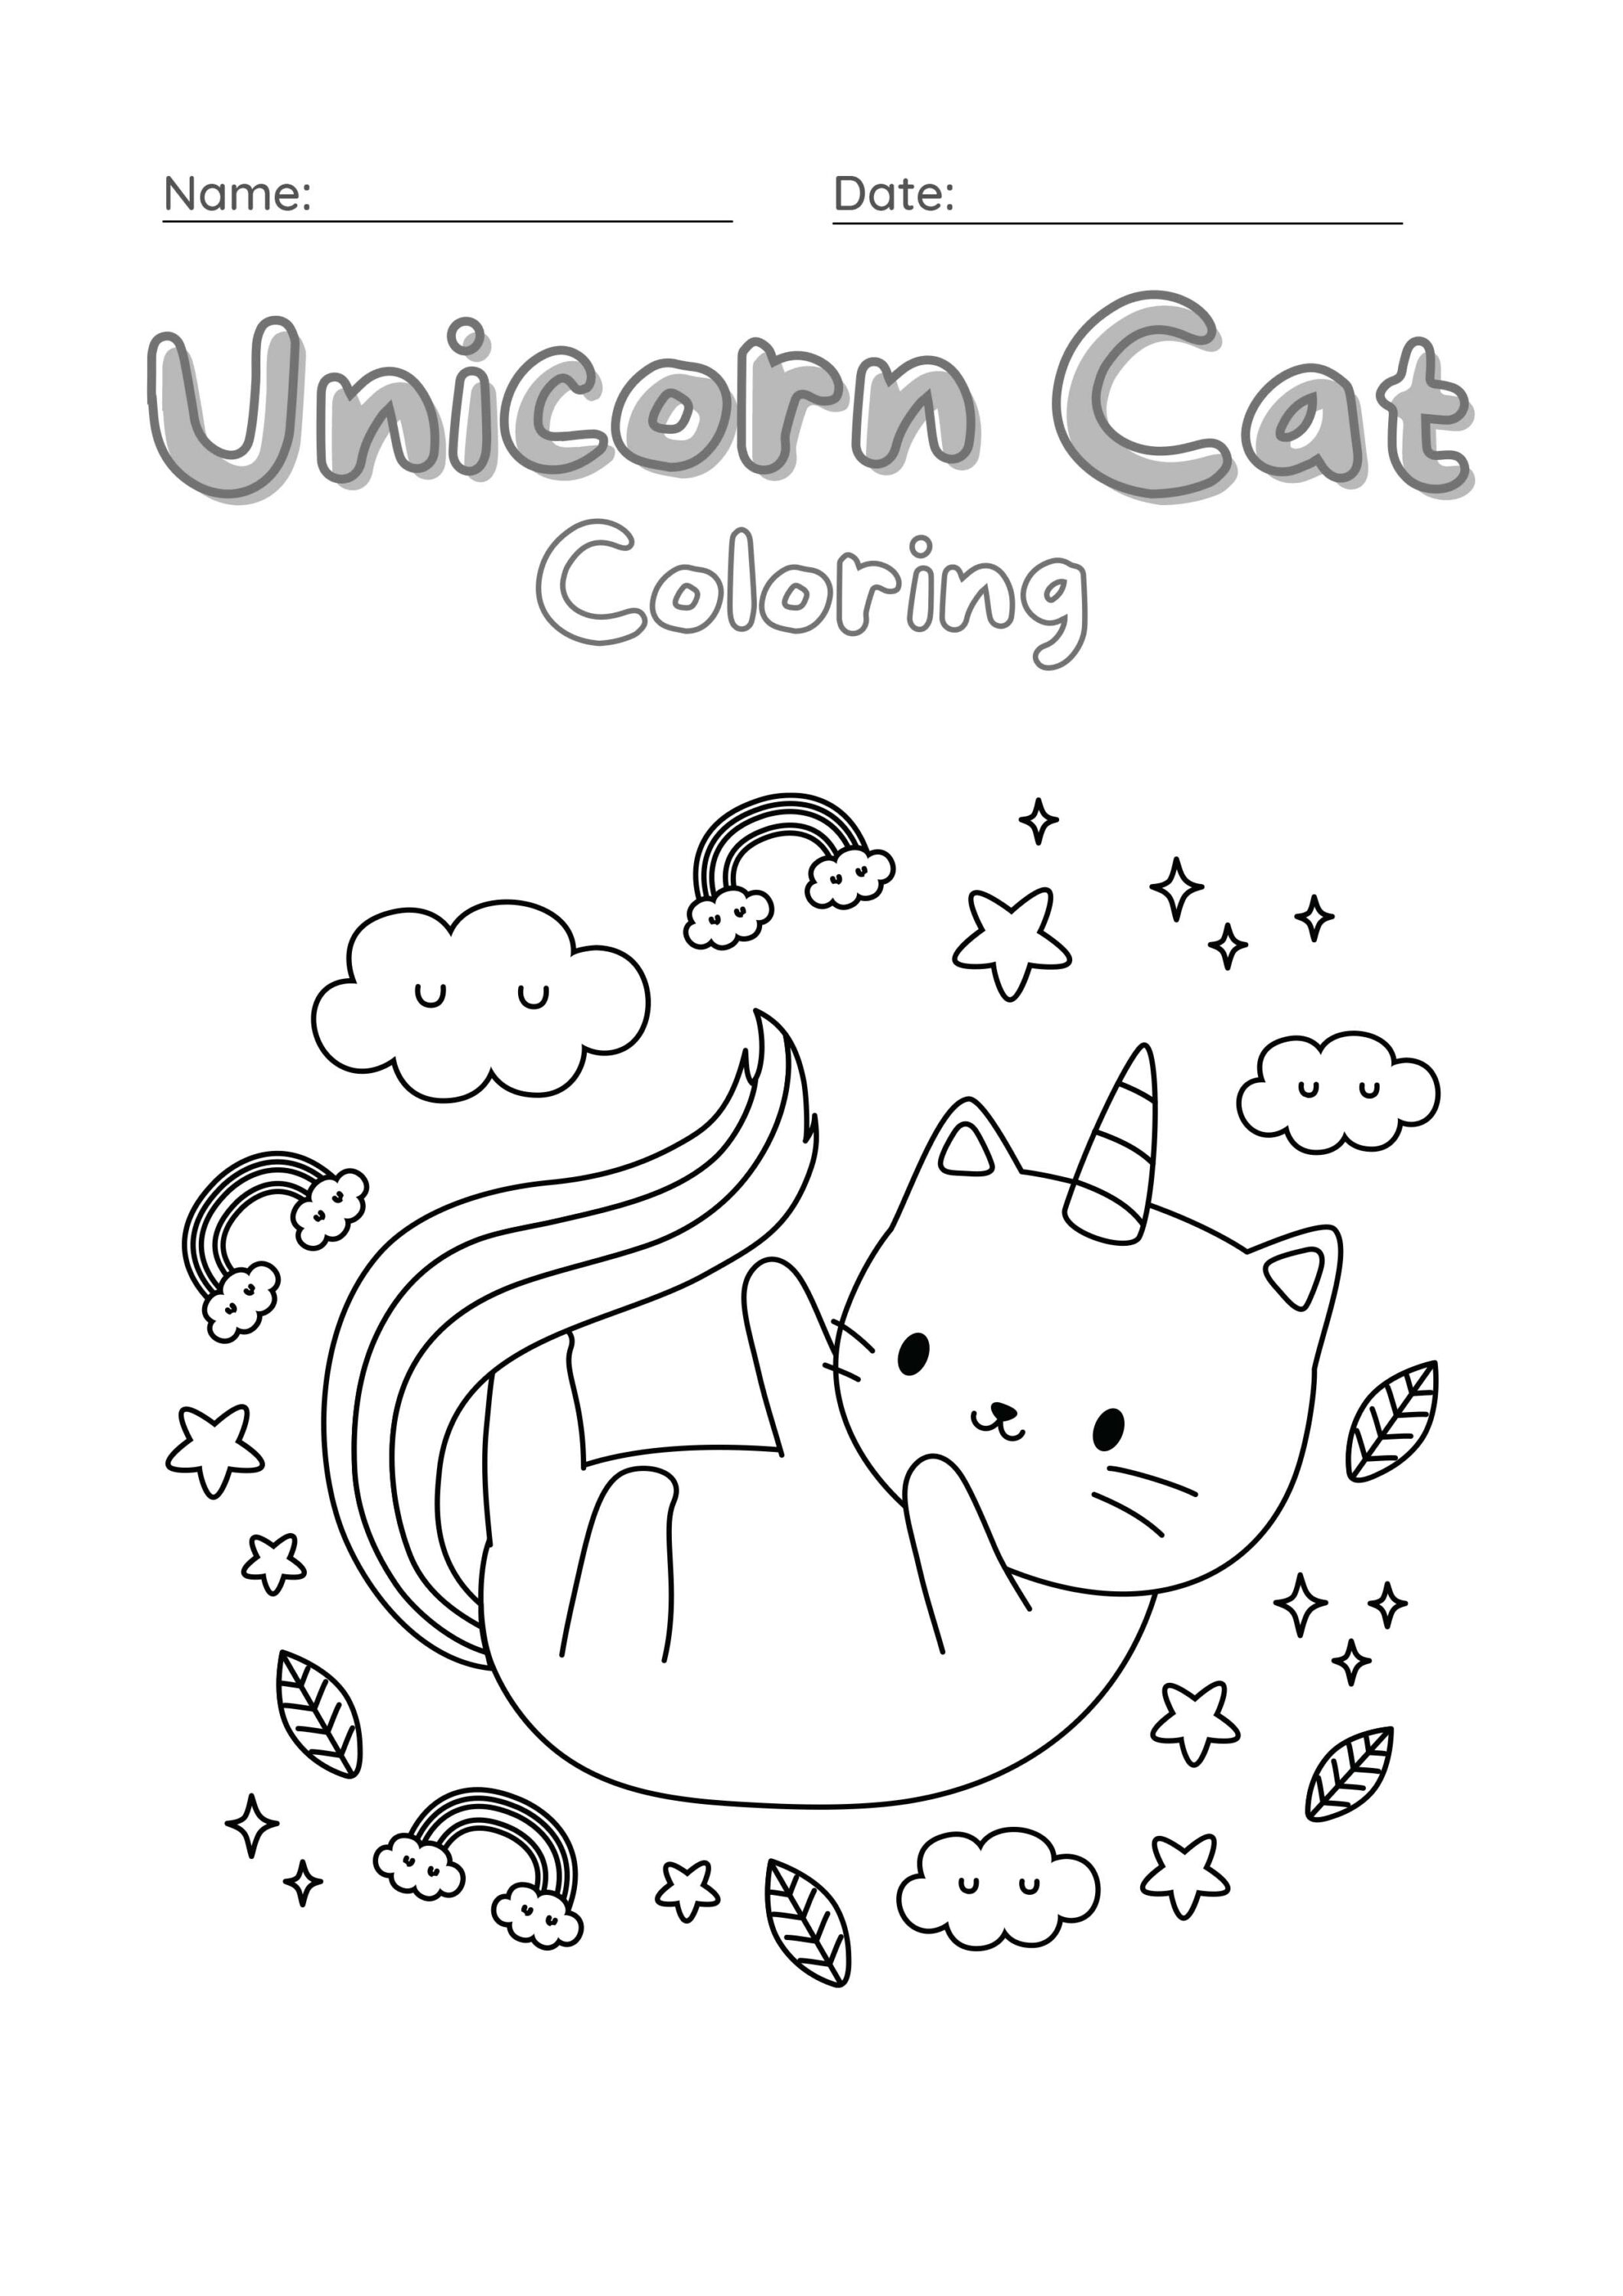 Unicorn Cat Coloring Worksheet Set 5